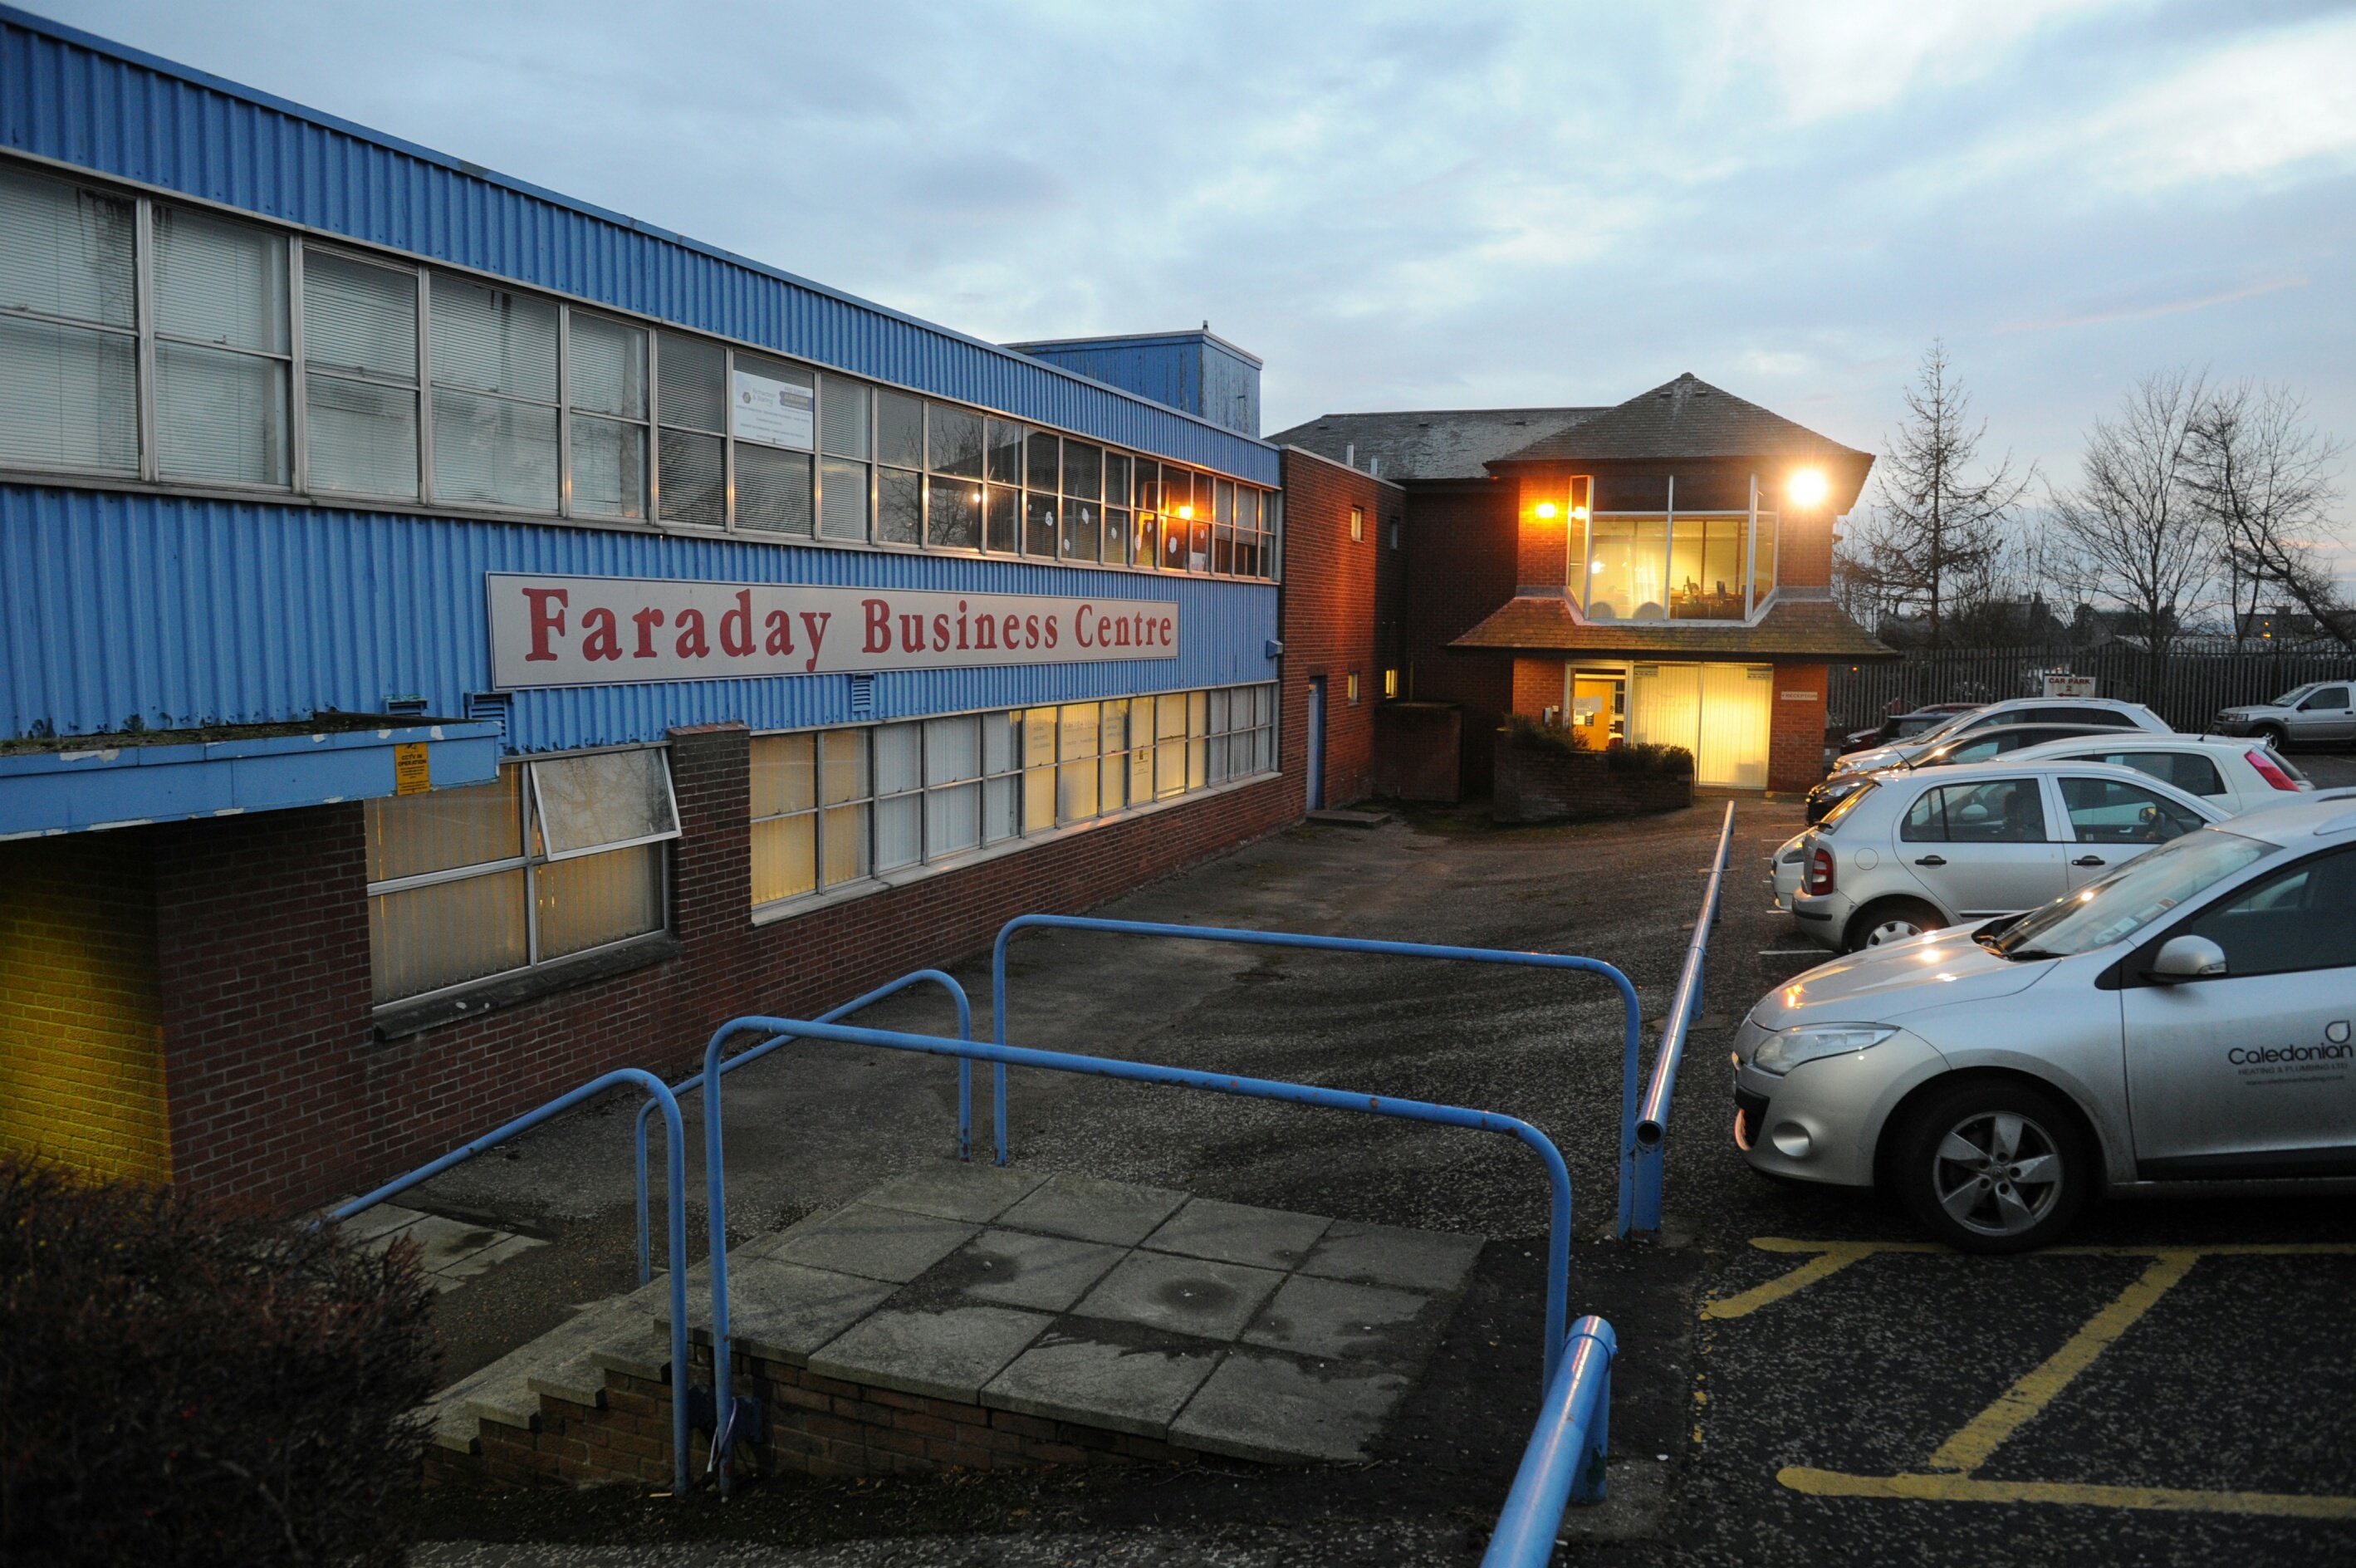 The Faraday Business Centre.